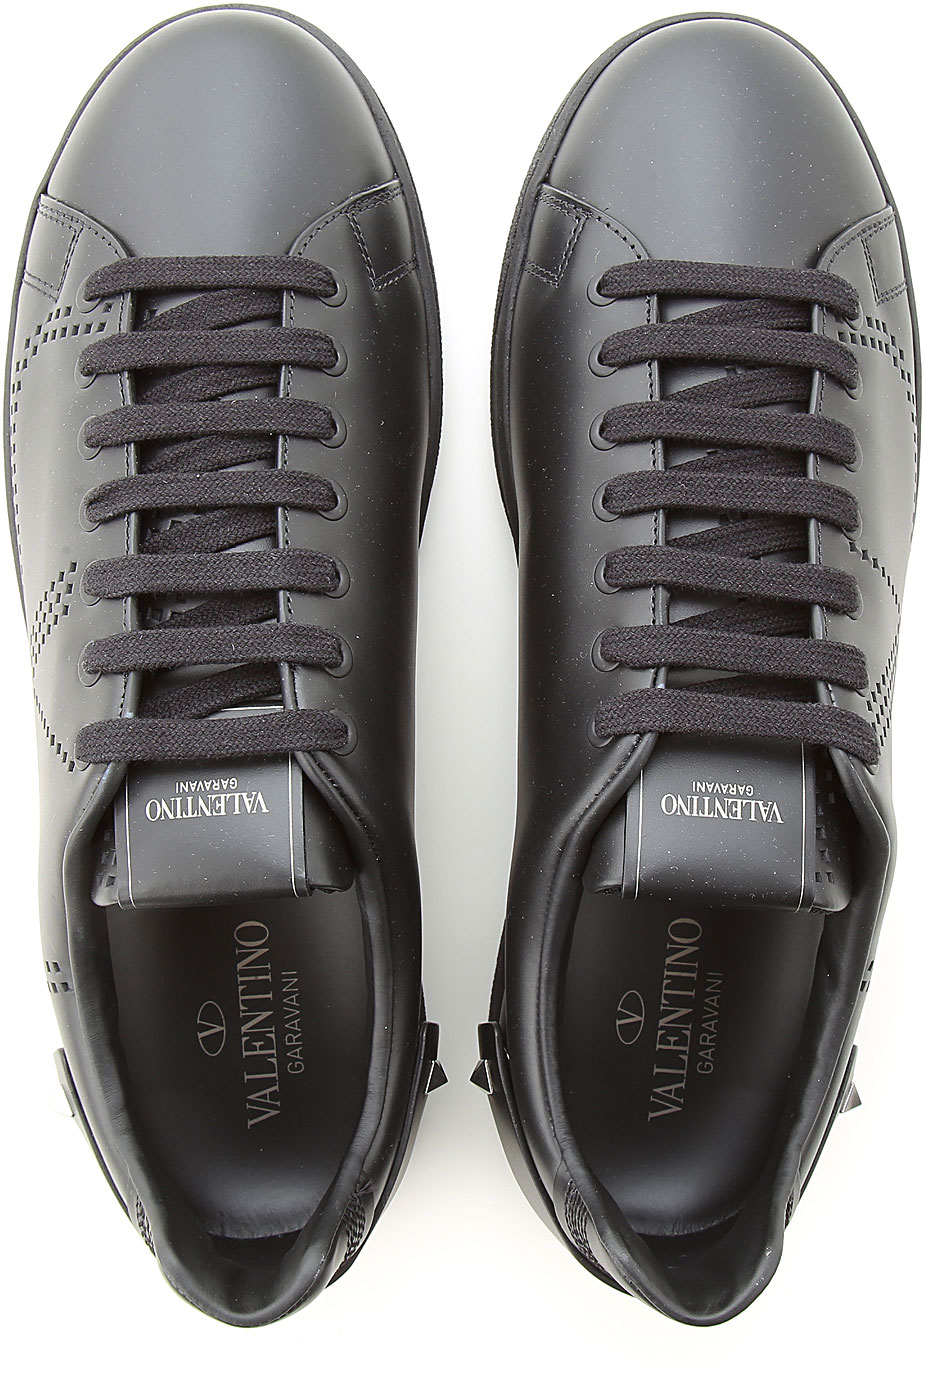 Mens Shoes Valentino Garavani, Style code: uy0s0c04-mmk-0n0